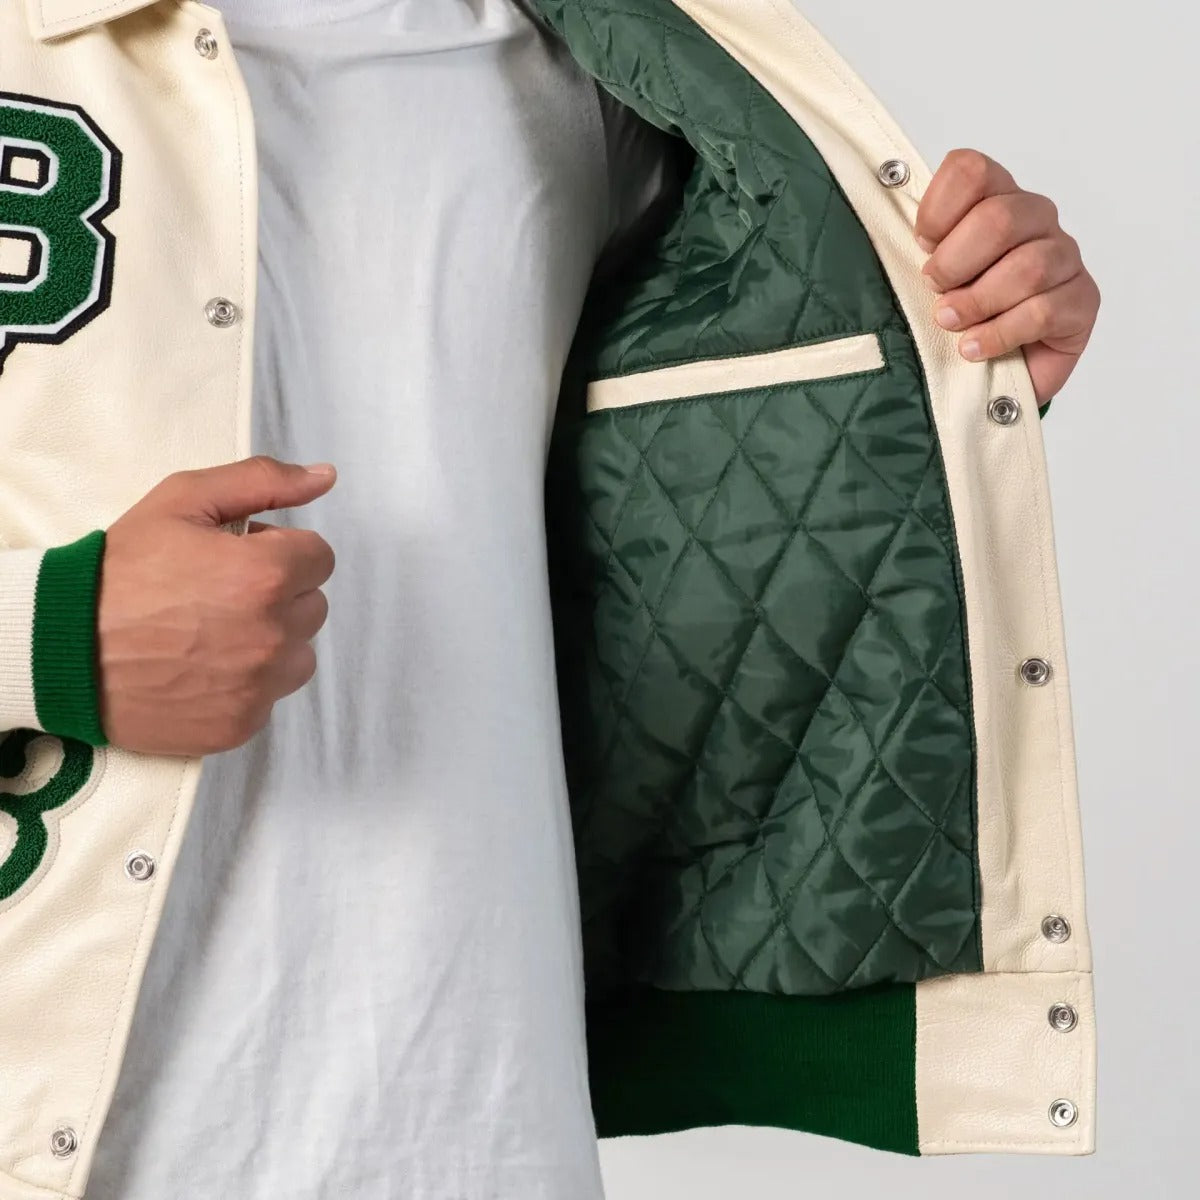 Boston Limited Edition Off White Varsity Jacket